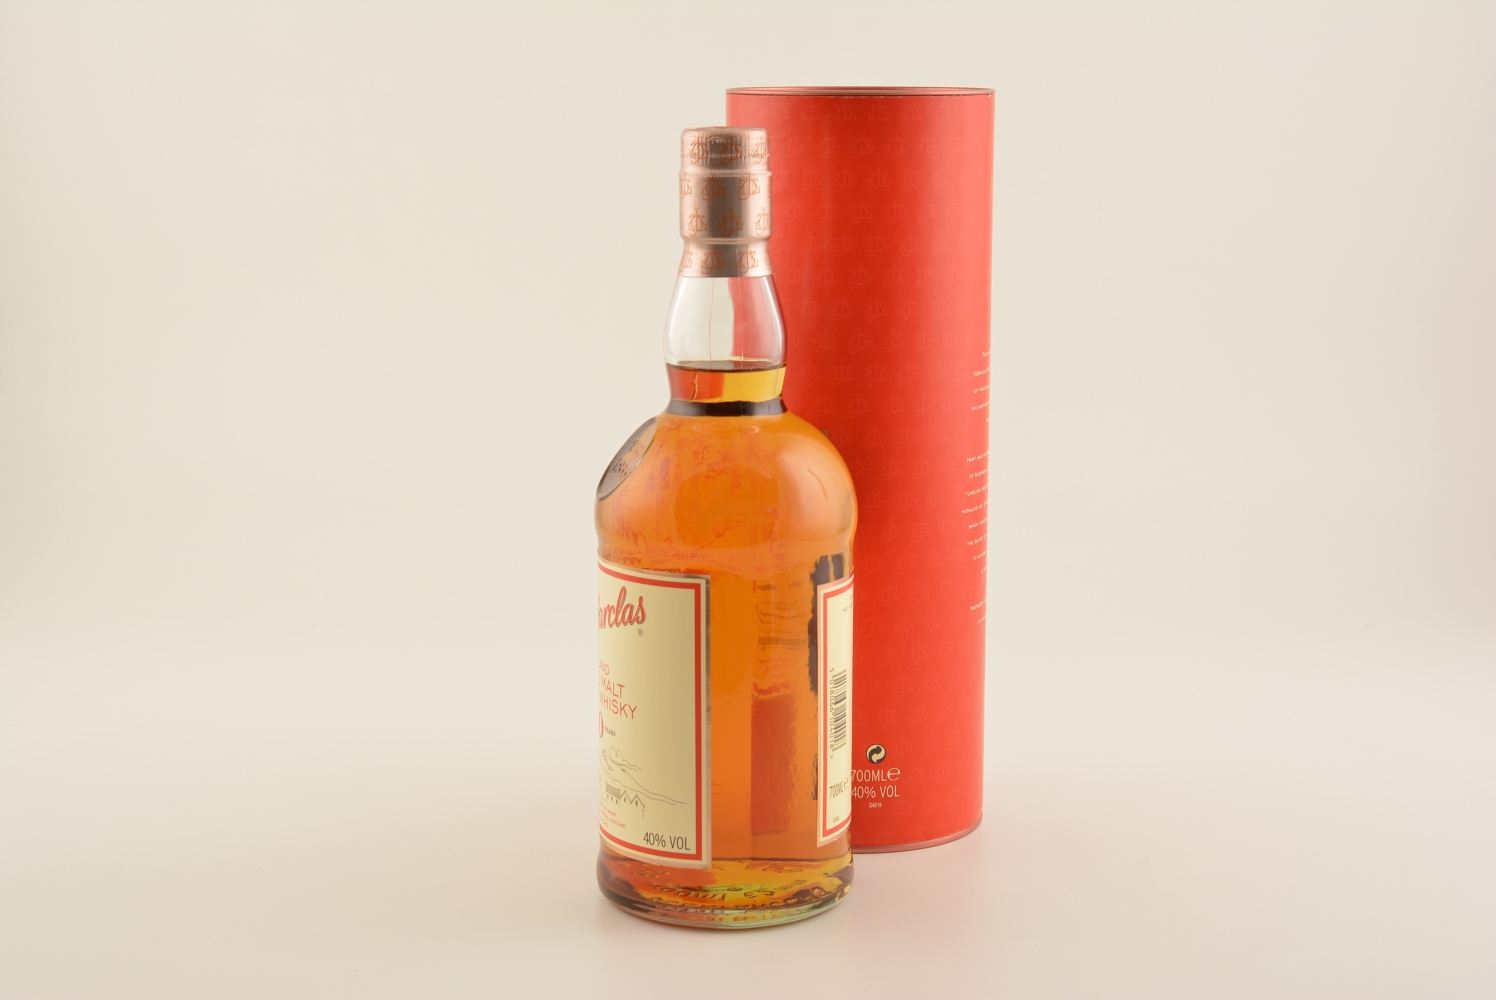 Glenfarclas 10 Jahre Speyside Whisky 40% 0,7l